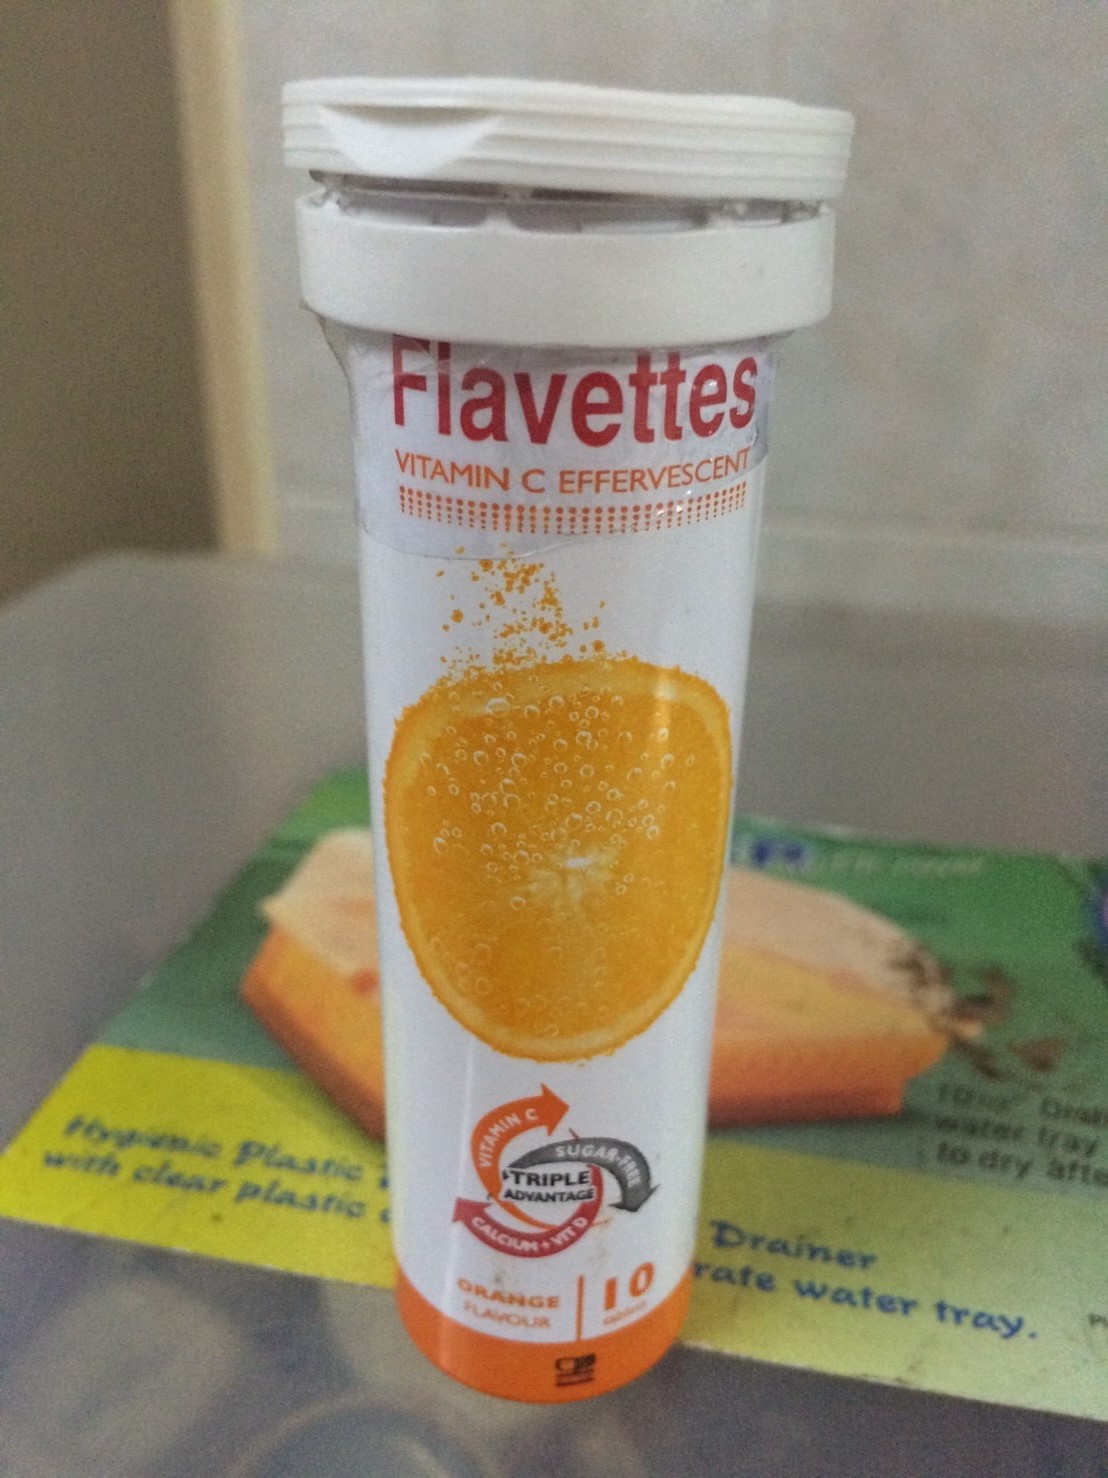 Flavettes Effervescent Vitamin C 1000mg reviews